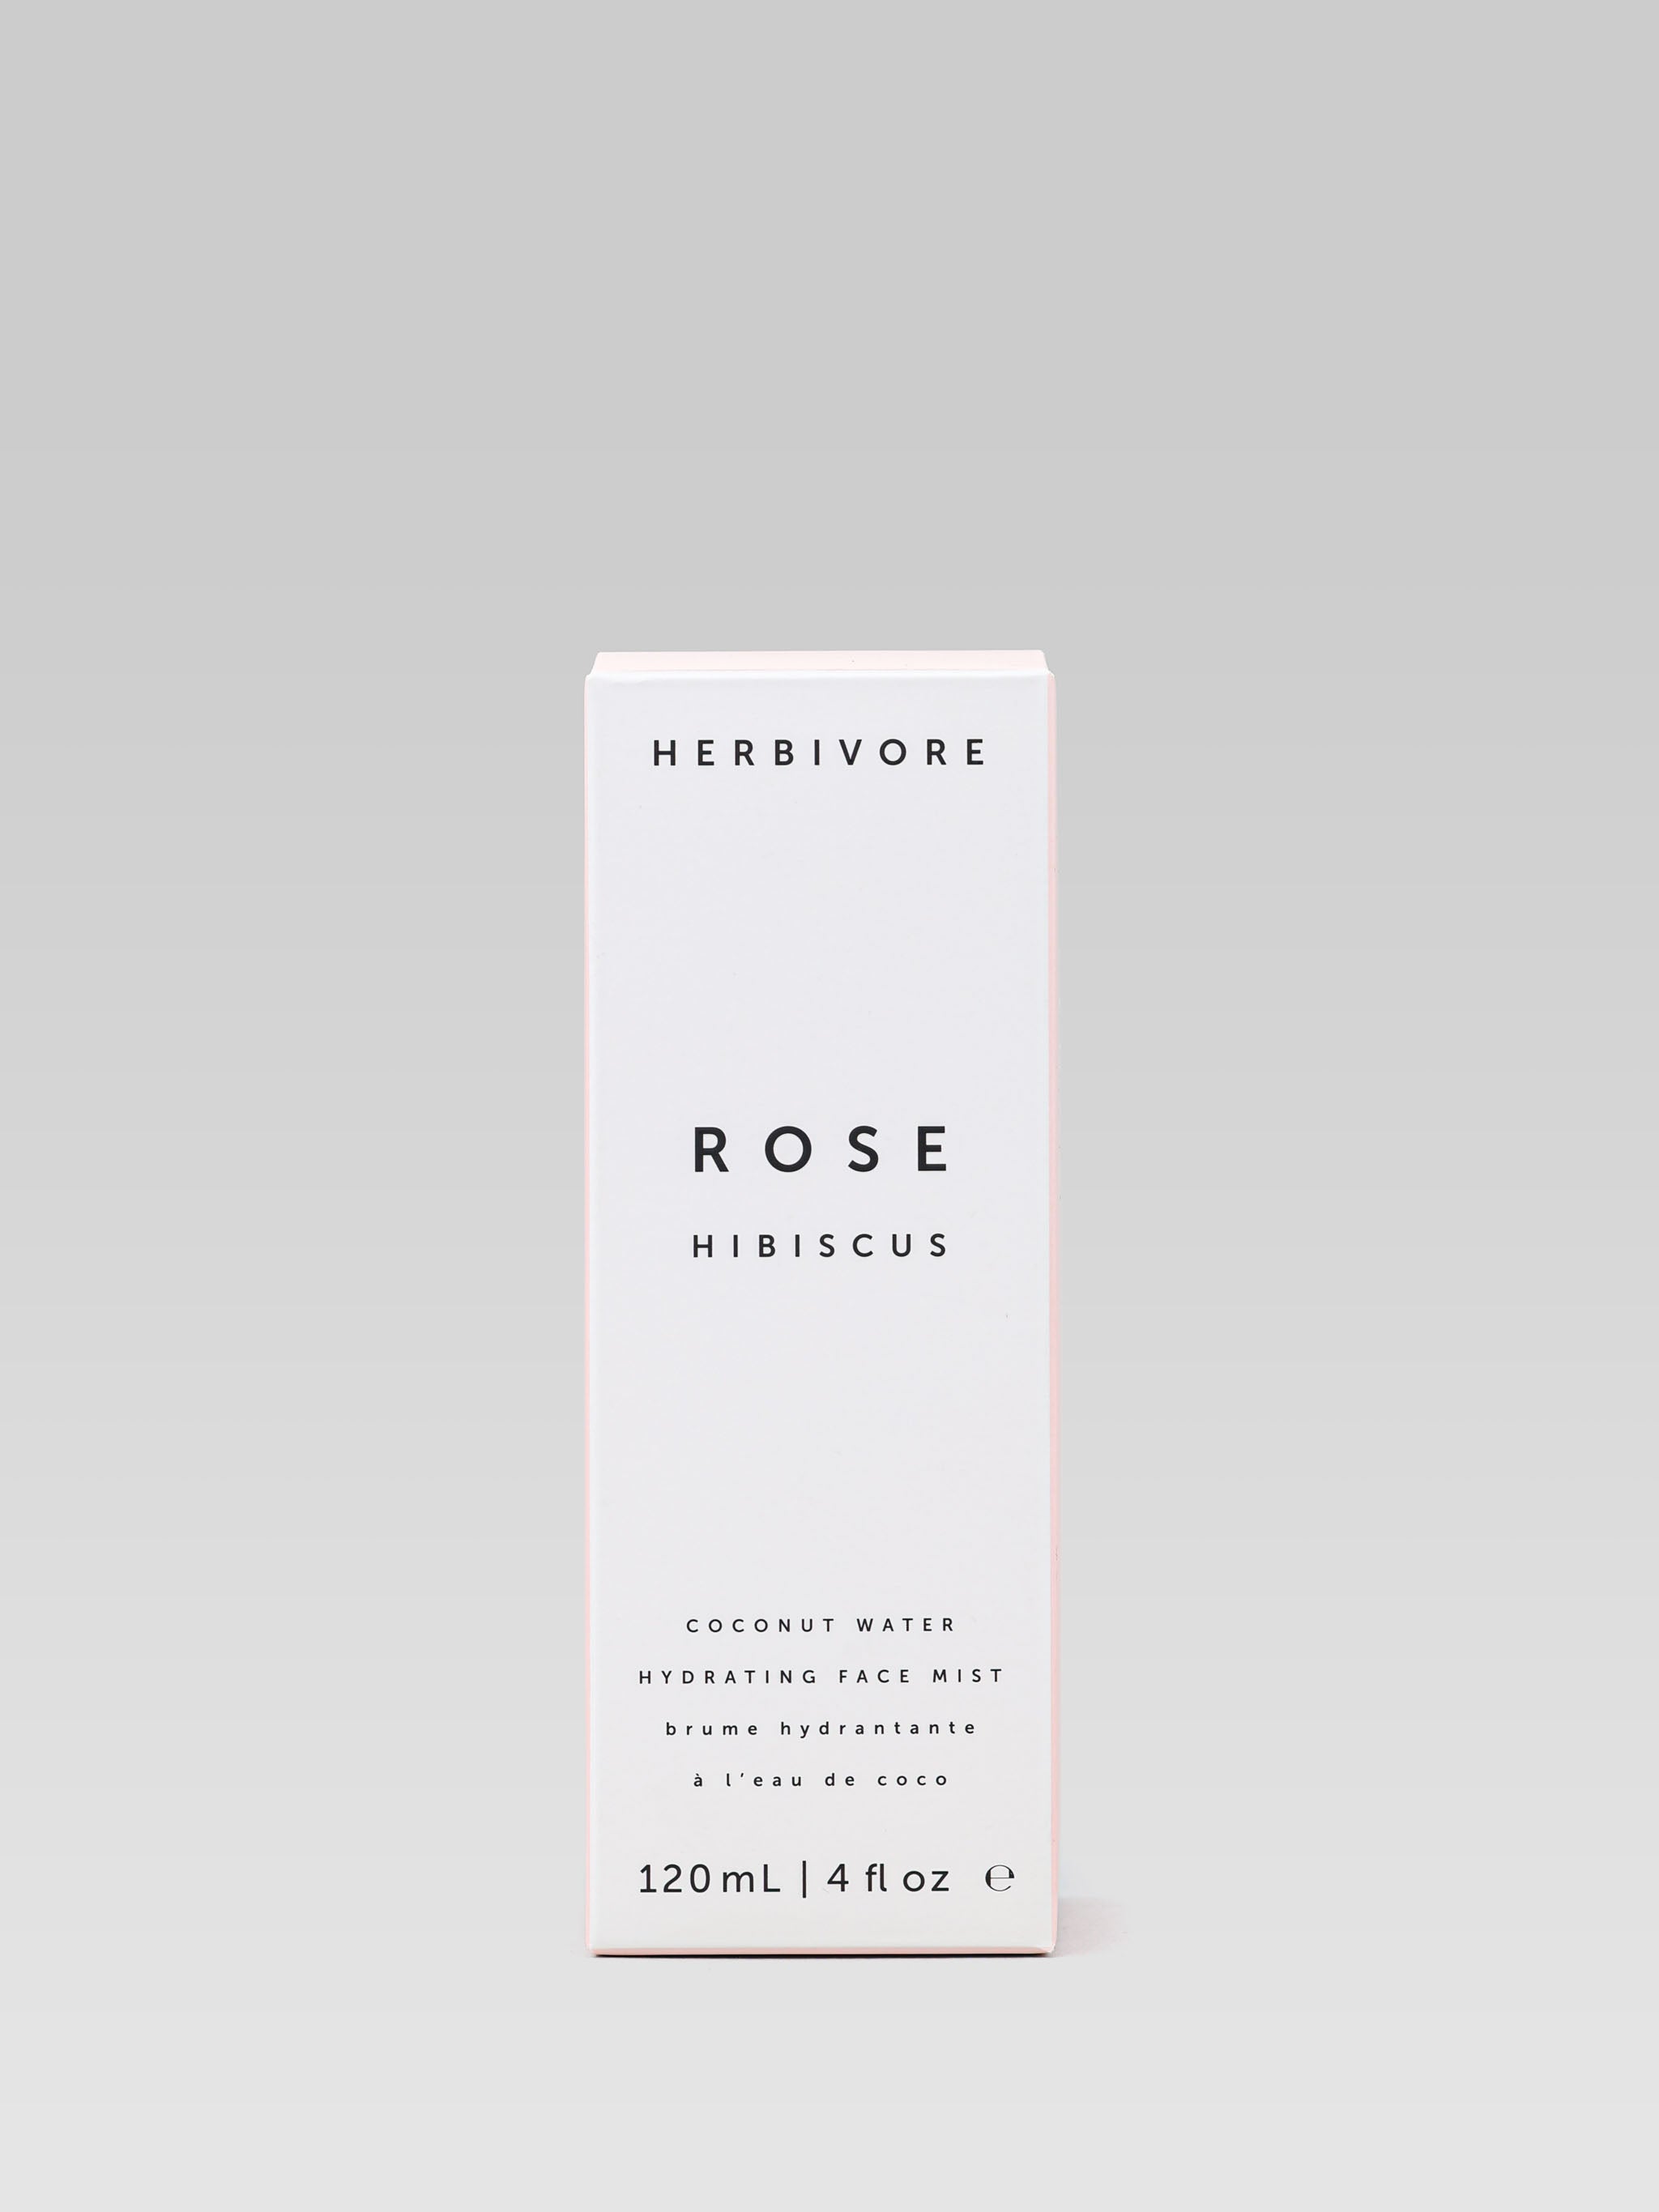 HERBIVORE BOTANICALS Rose Hibiscus Hydrating Mist product packaging